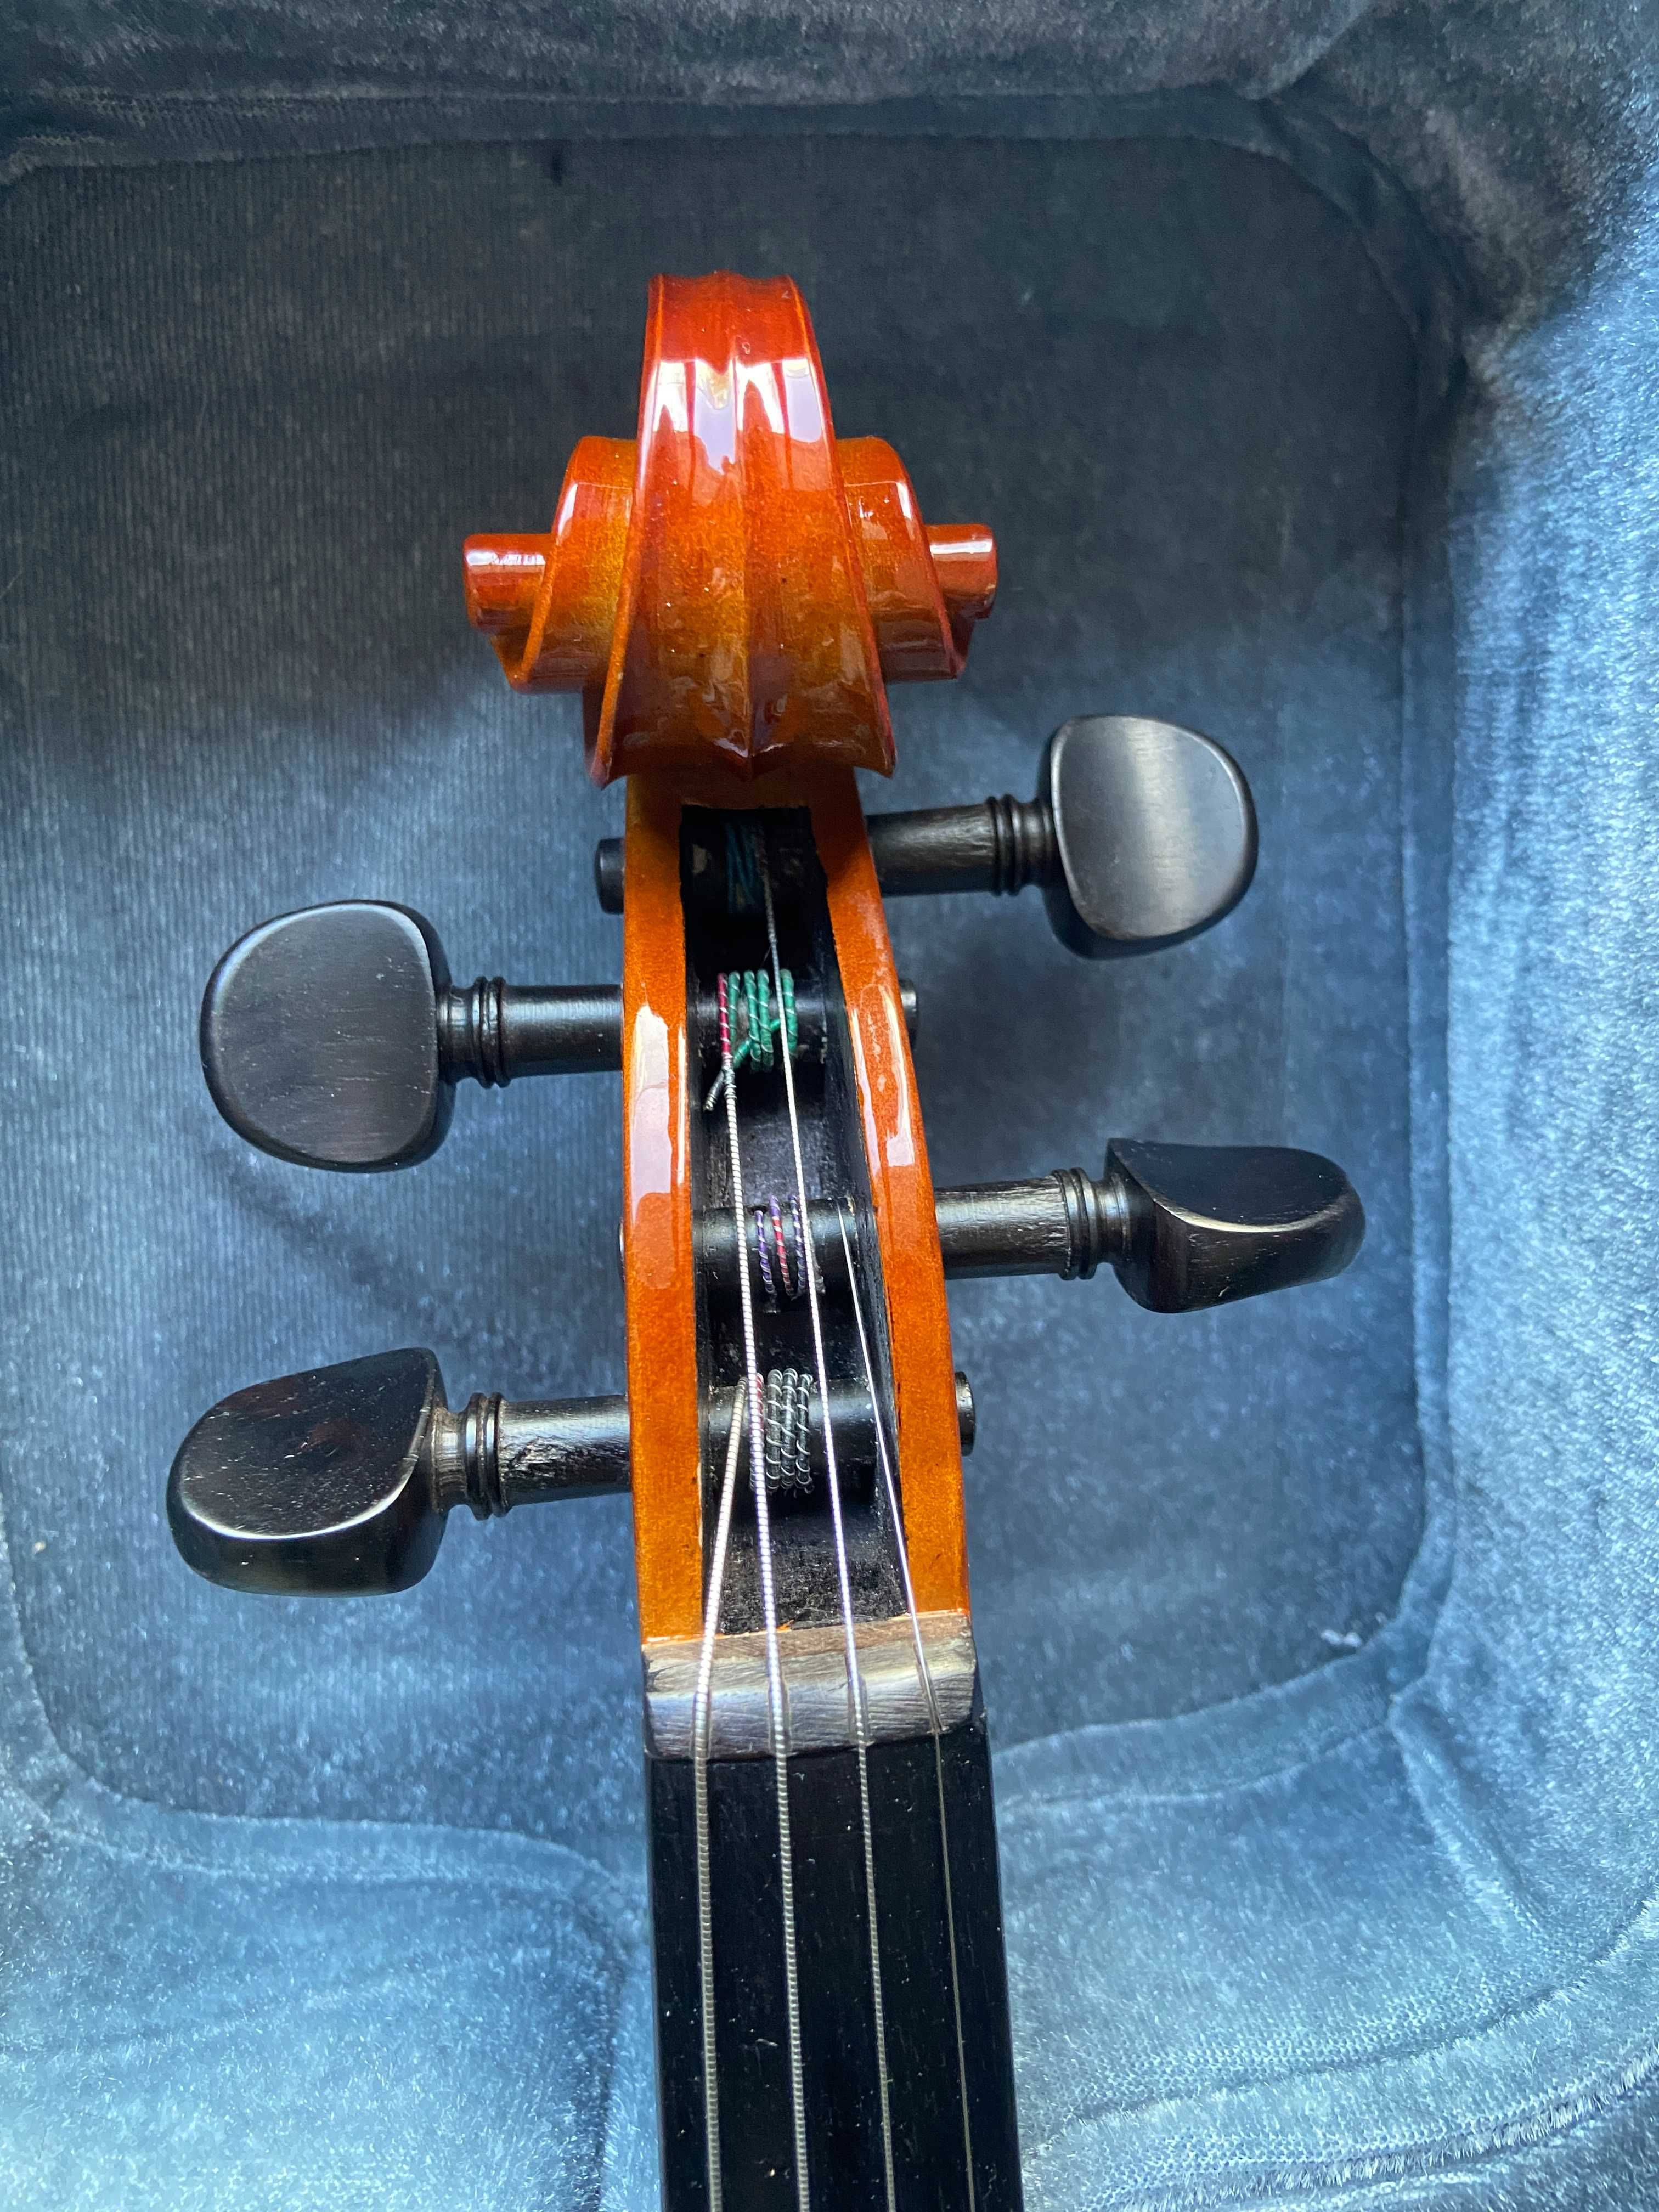 Violino Stentor Conservatoire 4/4 como novo